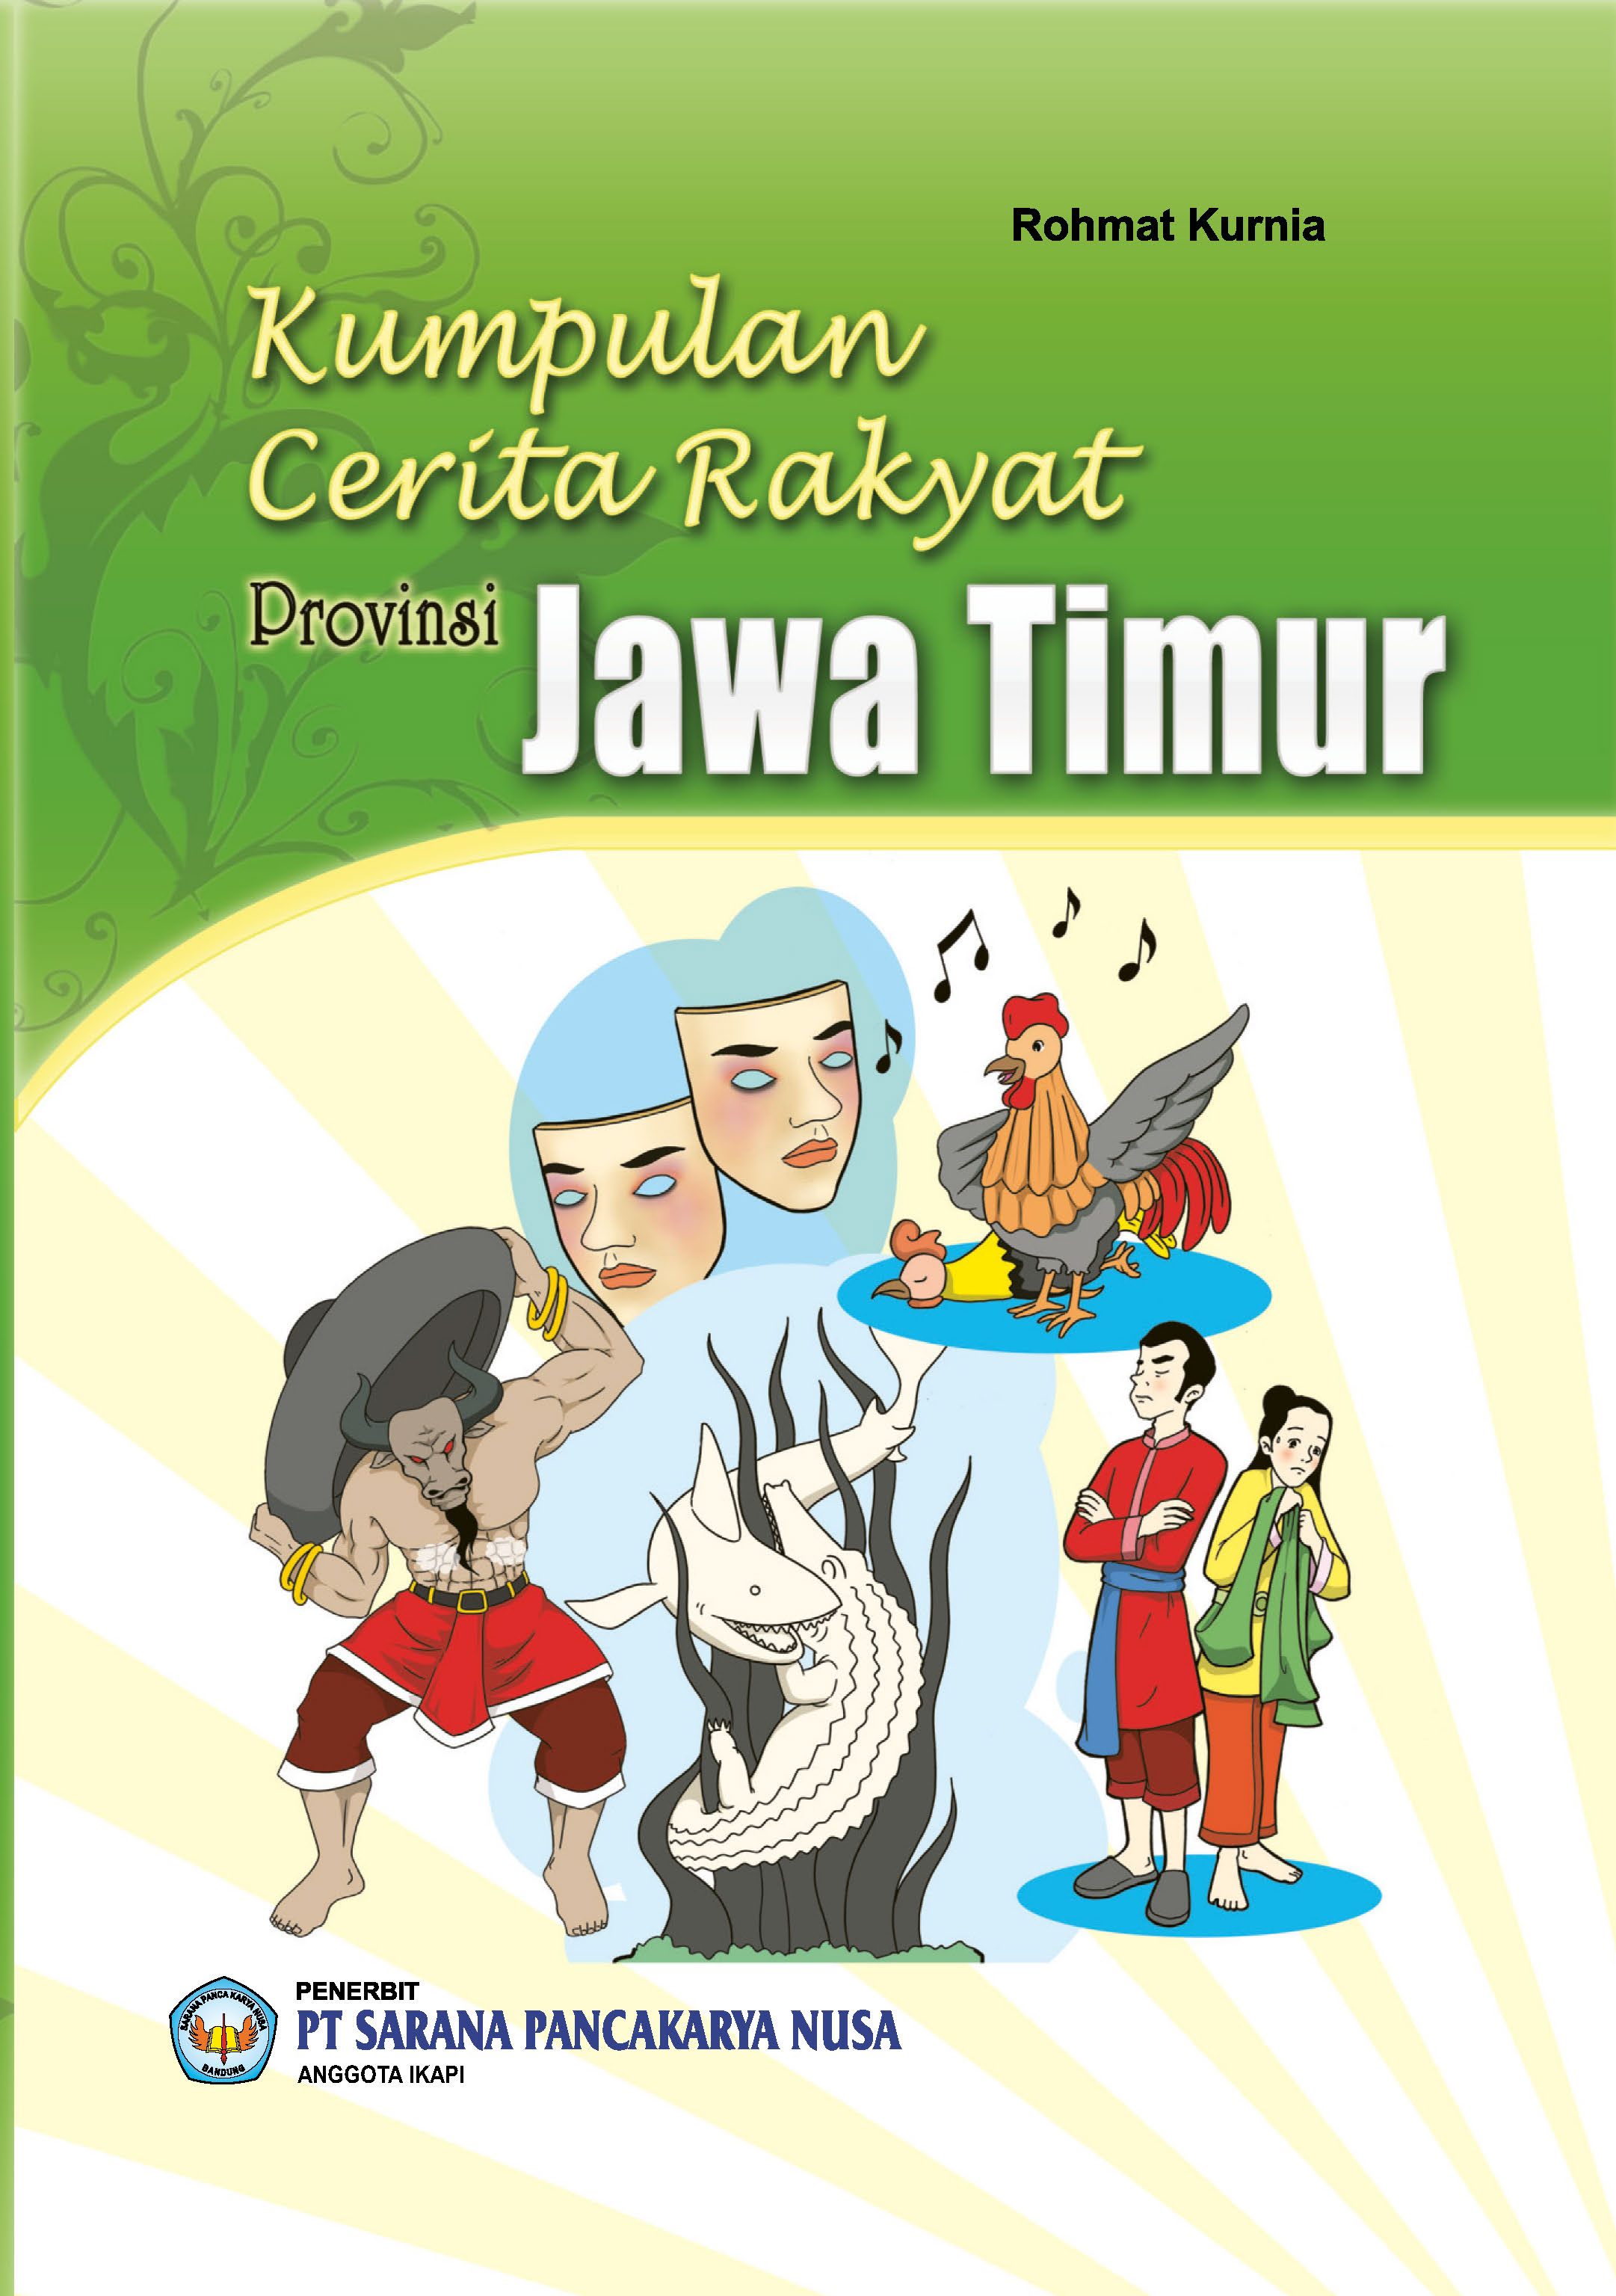 Kumpulan cerita rakyat Provinsi Jawa Timur [sumber elektronis]